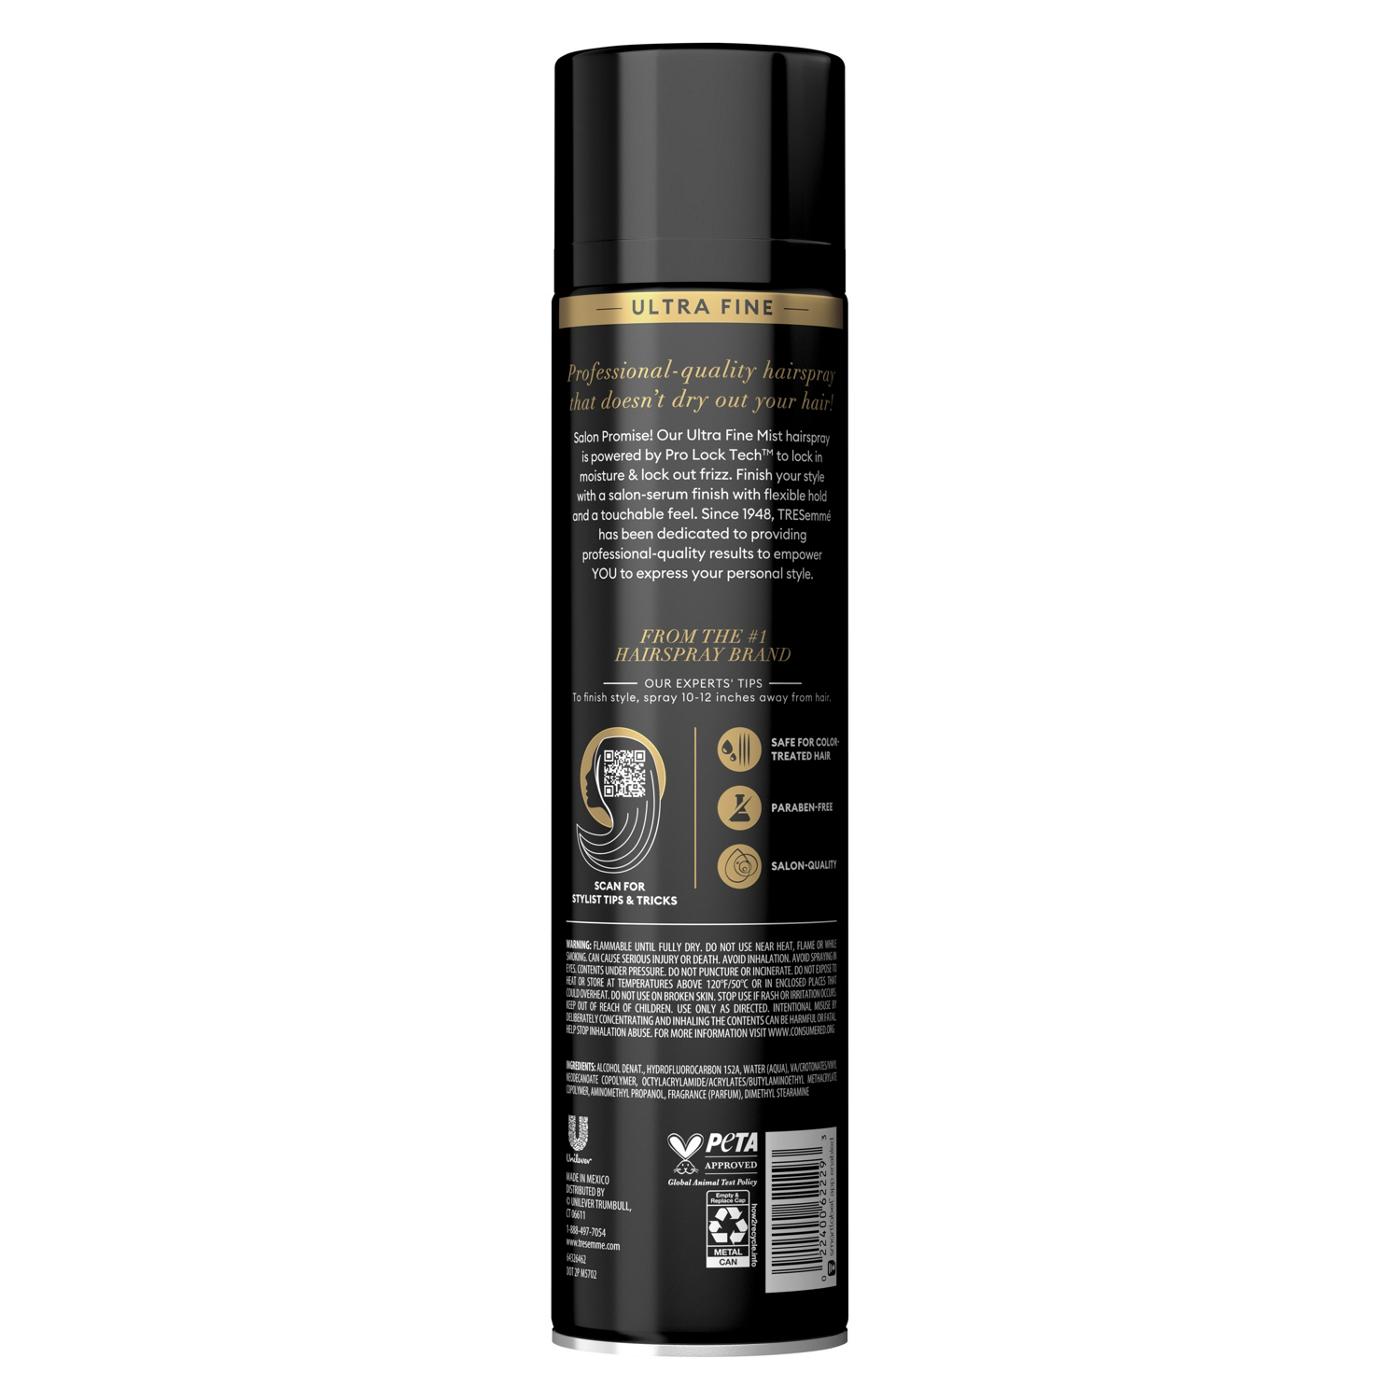 TRESemmé Pro Lock Tech Ultra Fine Hairspray; image 4 of 4